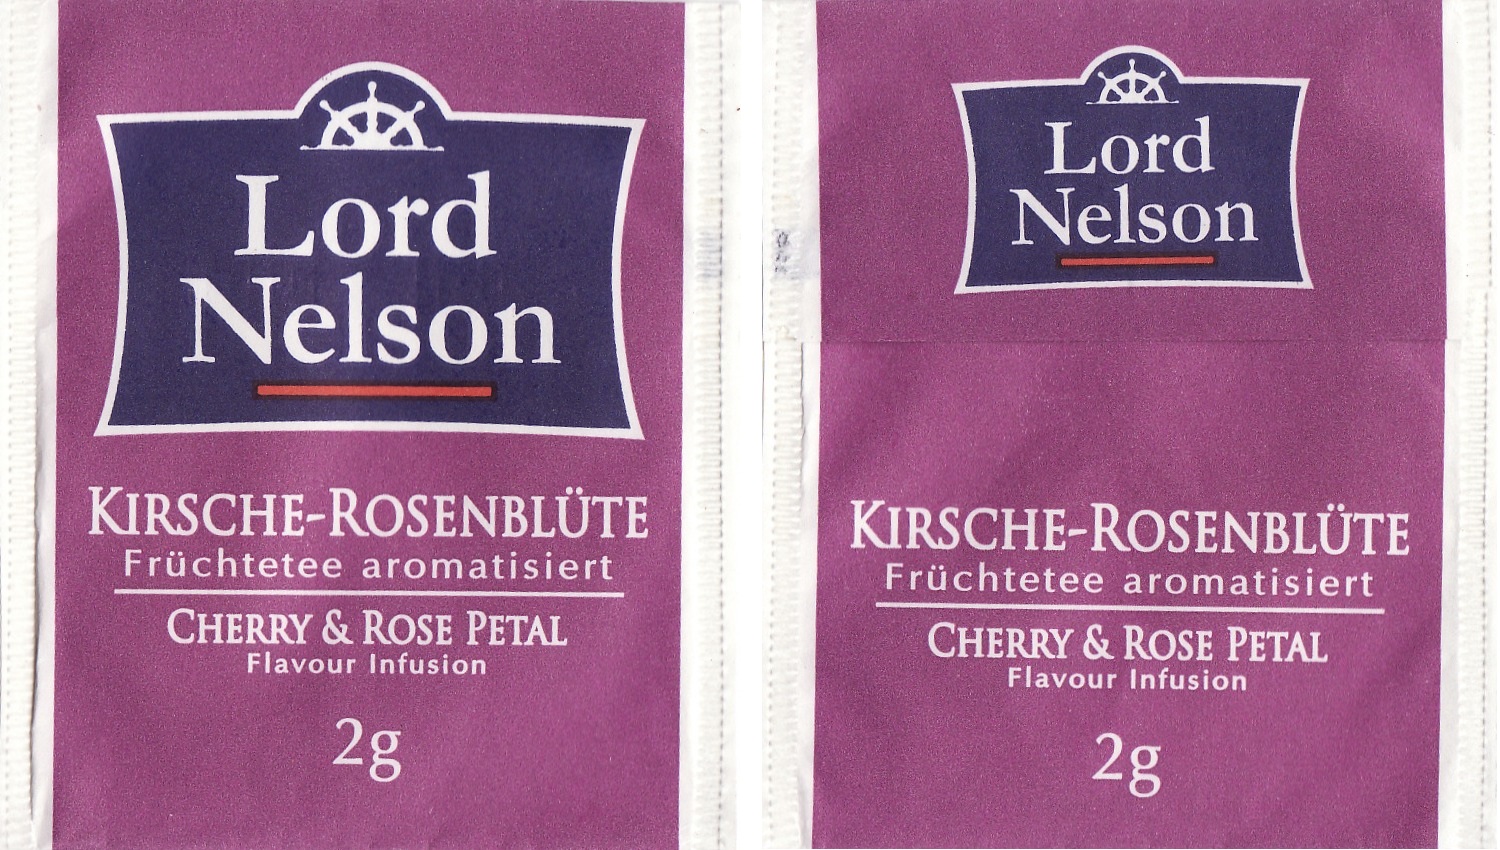 Lord Nelson - Kirsche Rosenblute